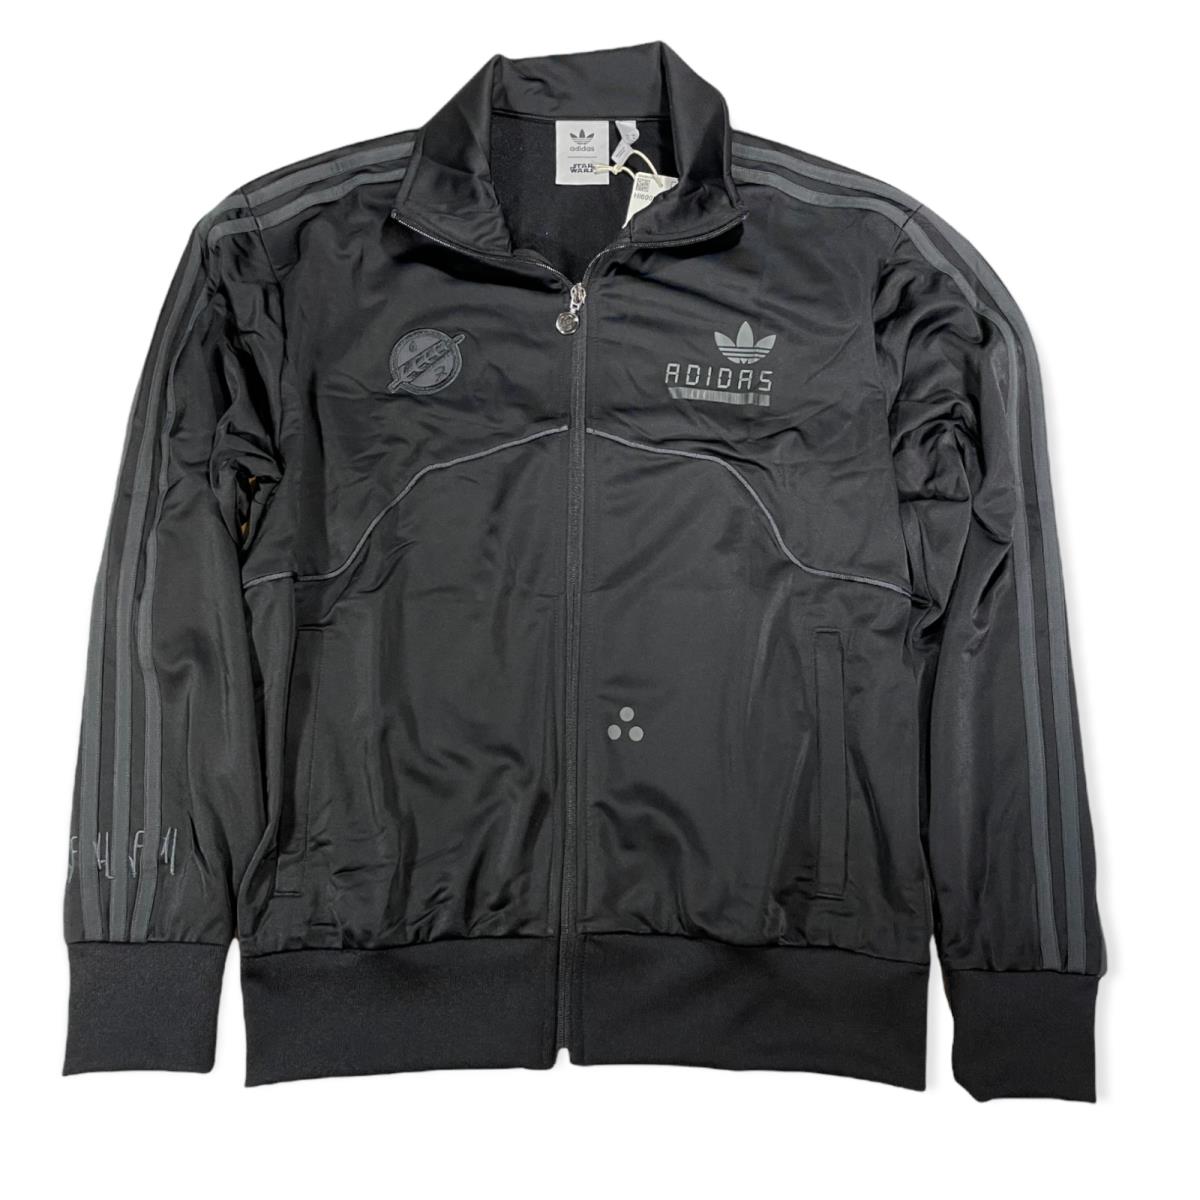 Adidas Star Wars Boba Fett Firebird Track Top Jacket Black HI6000 Men`s Large L